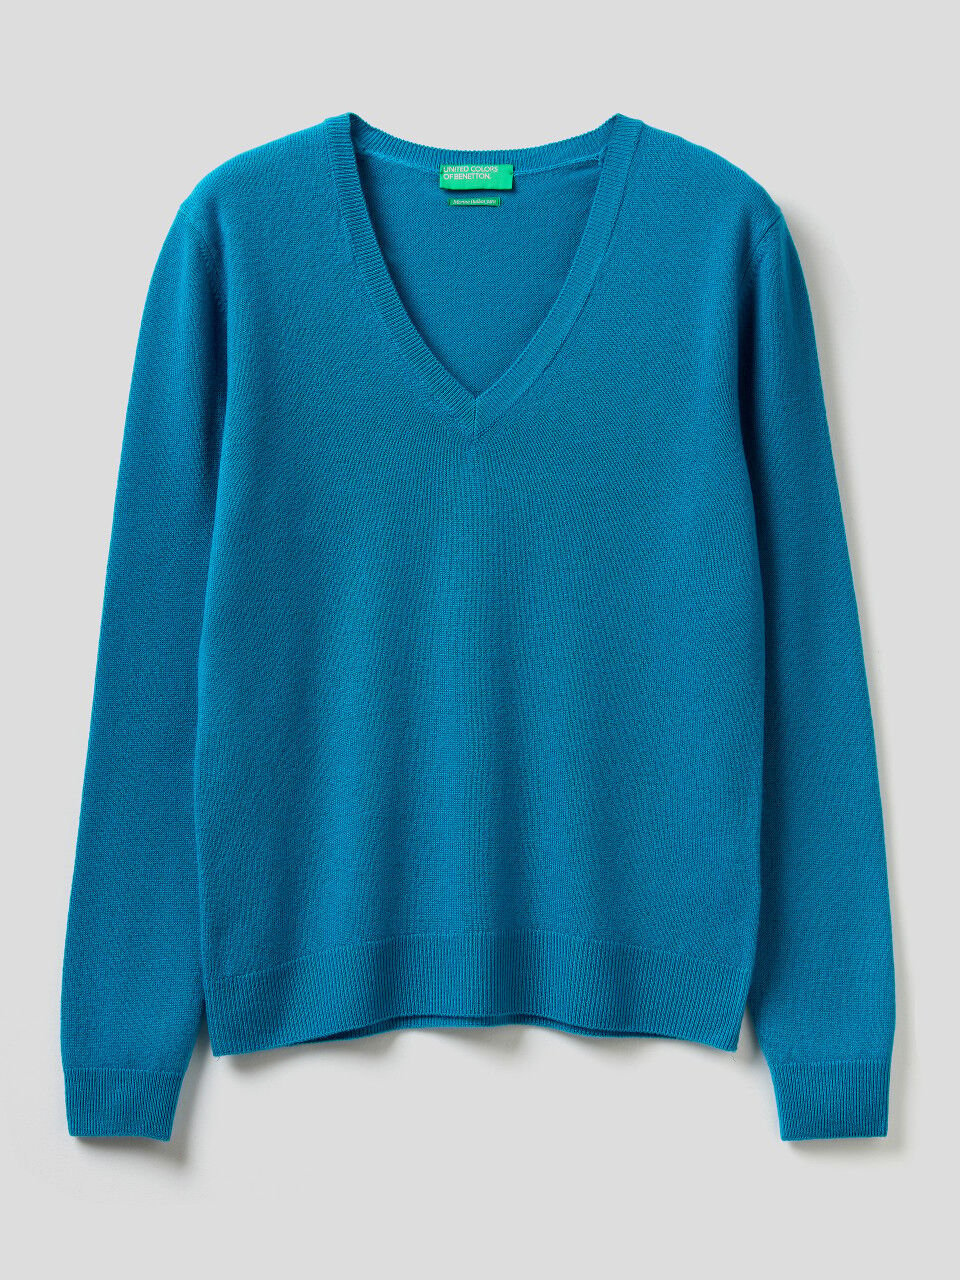 Women's Iconic Merino Wool Knitwear Collection 2022 | Benetton